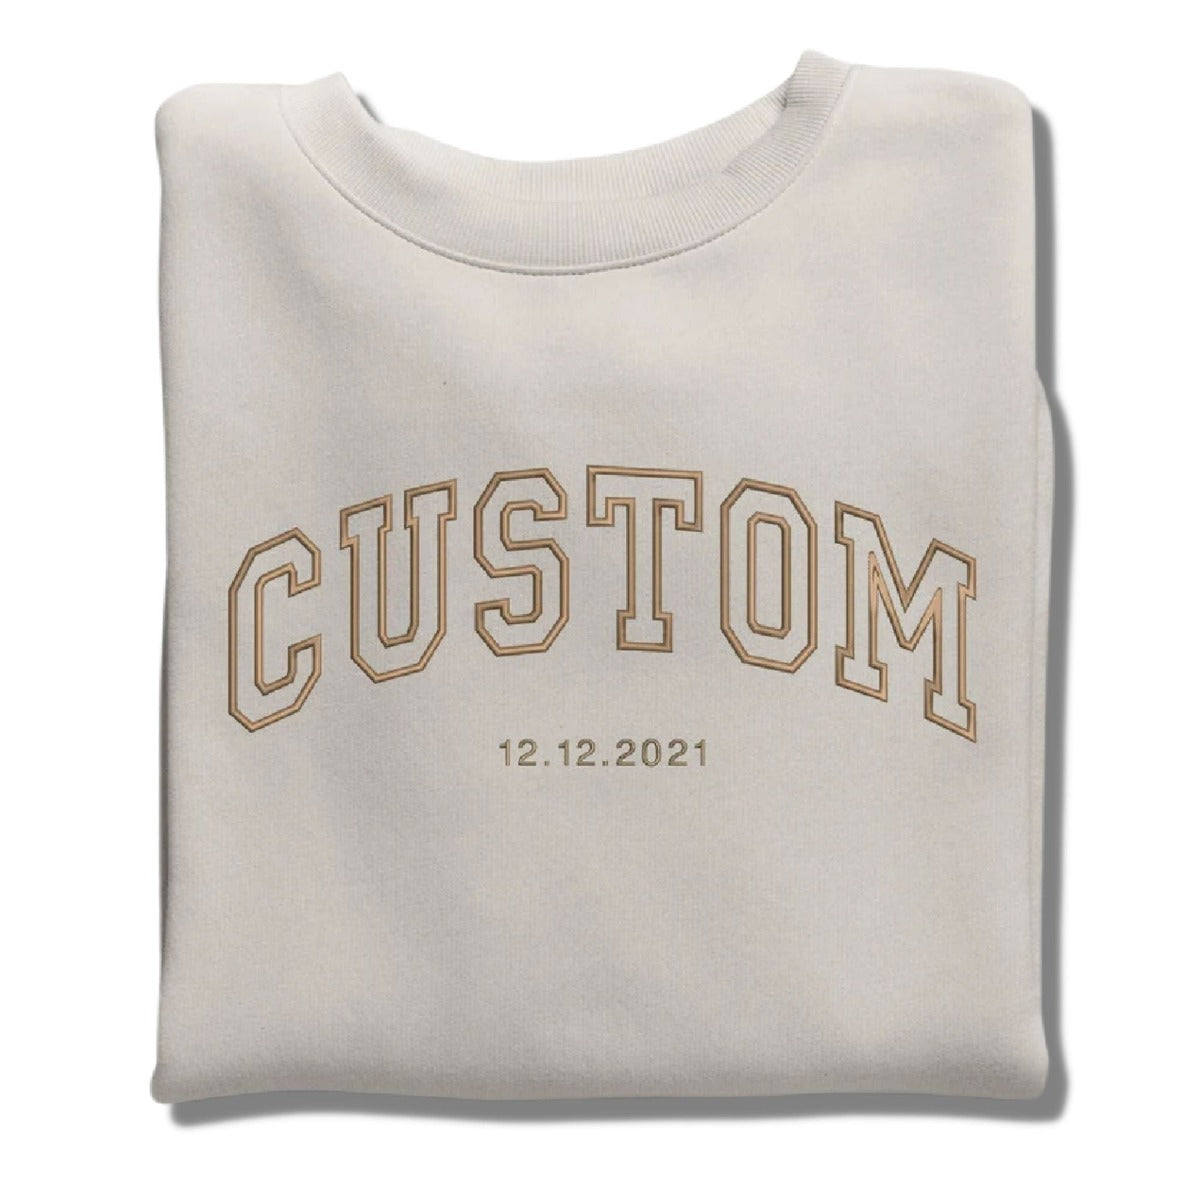 Embroly Custom Personalized Monogram Embroidered Sweatshirt